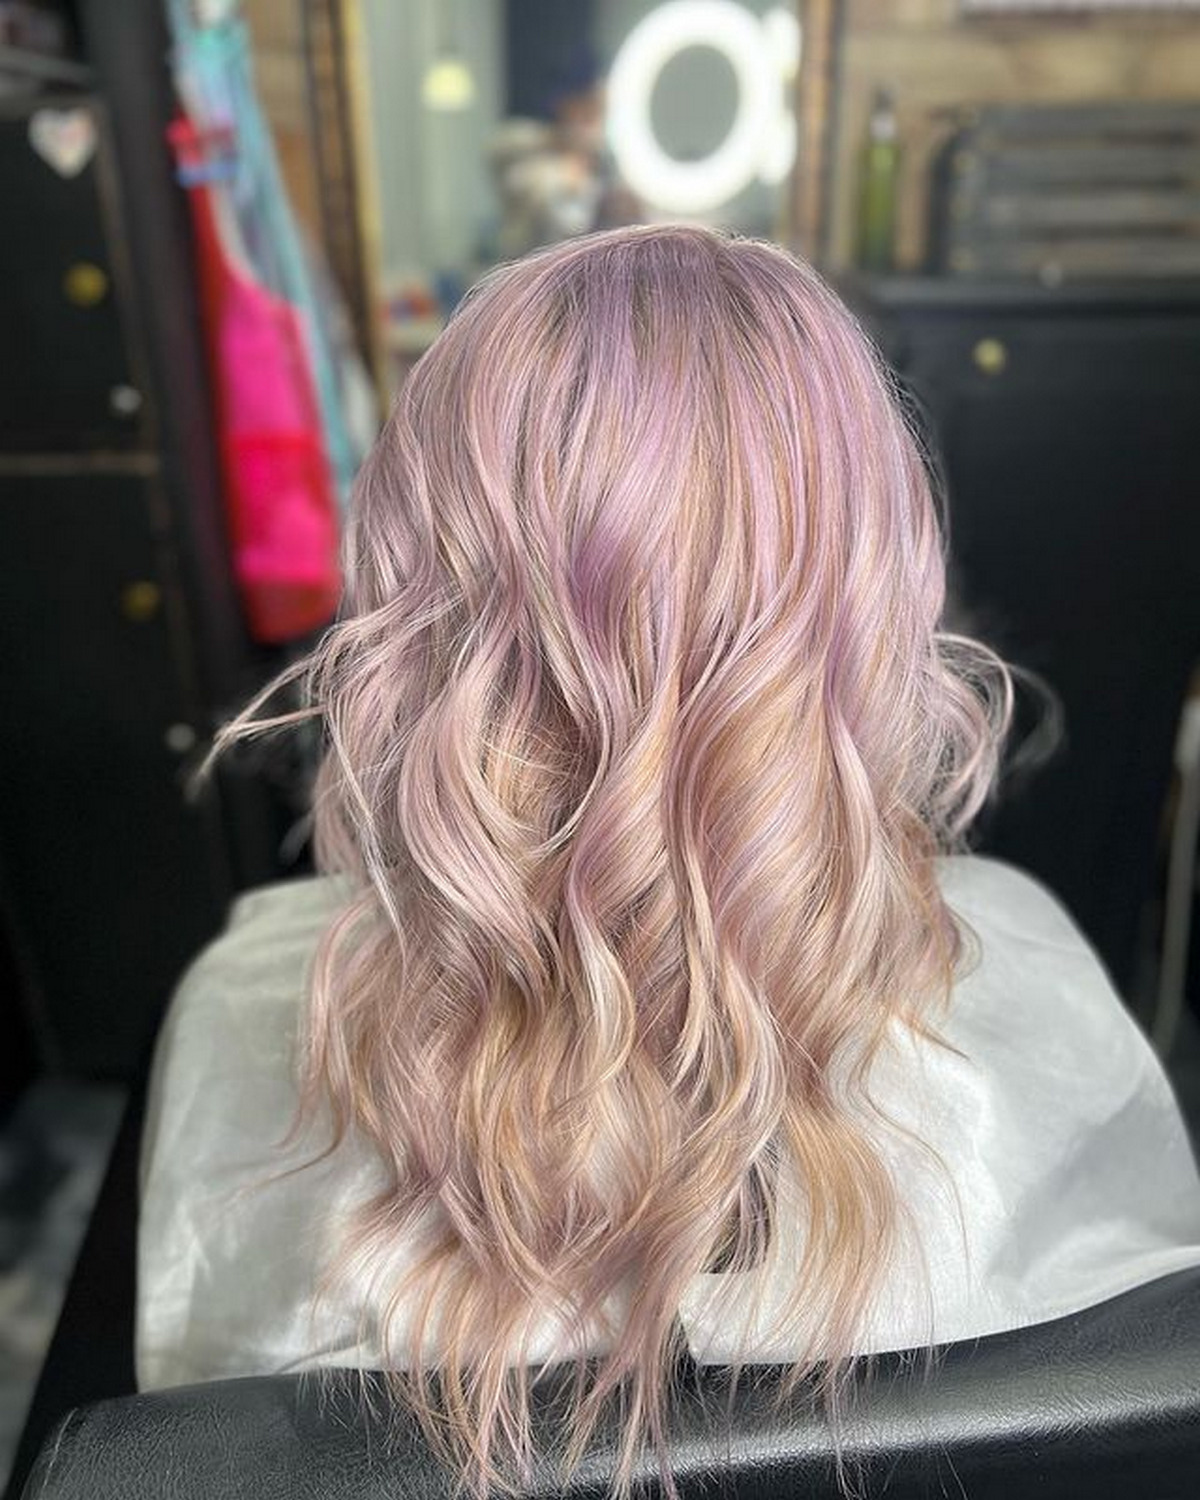 Medium-Length Hair With Lavender Color